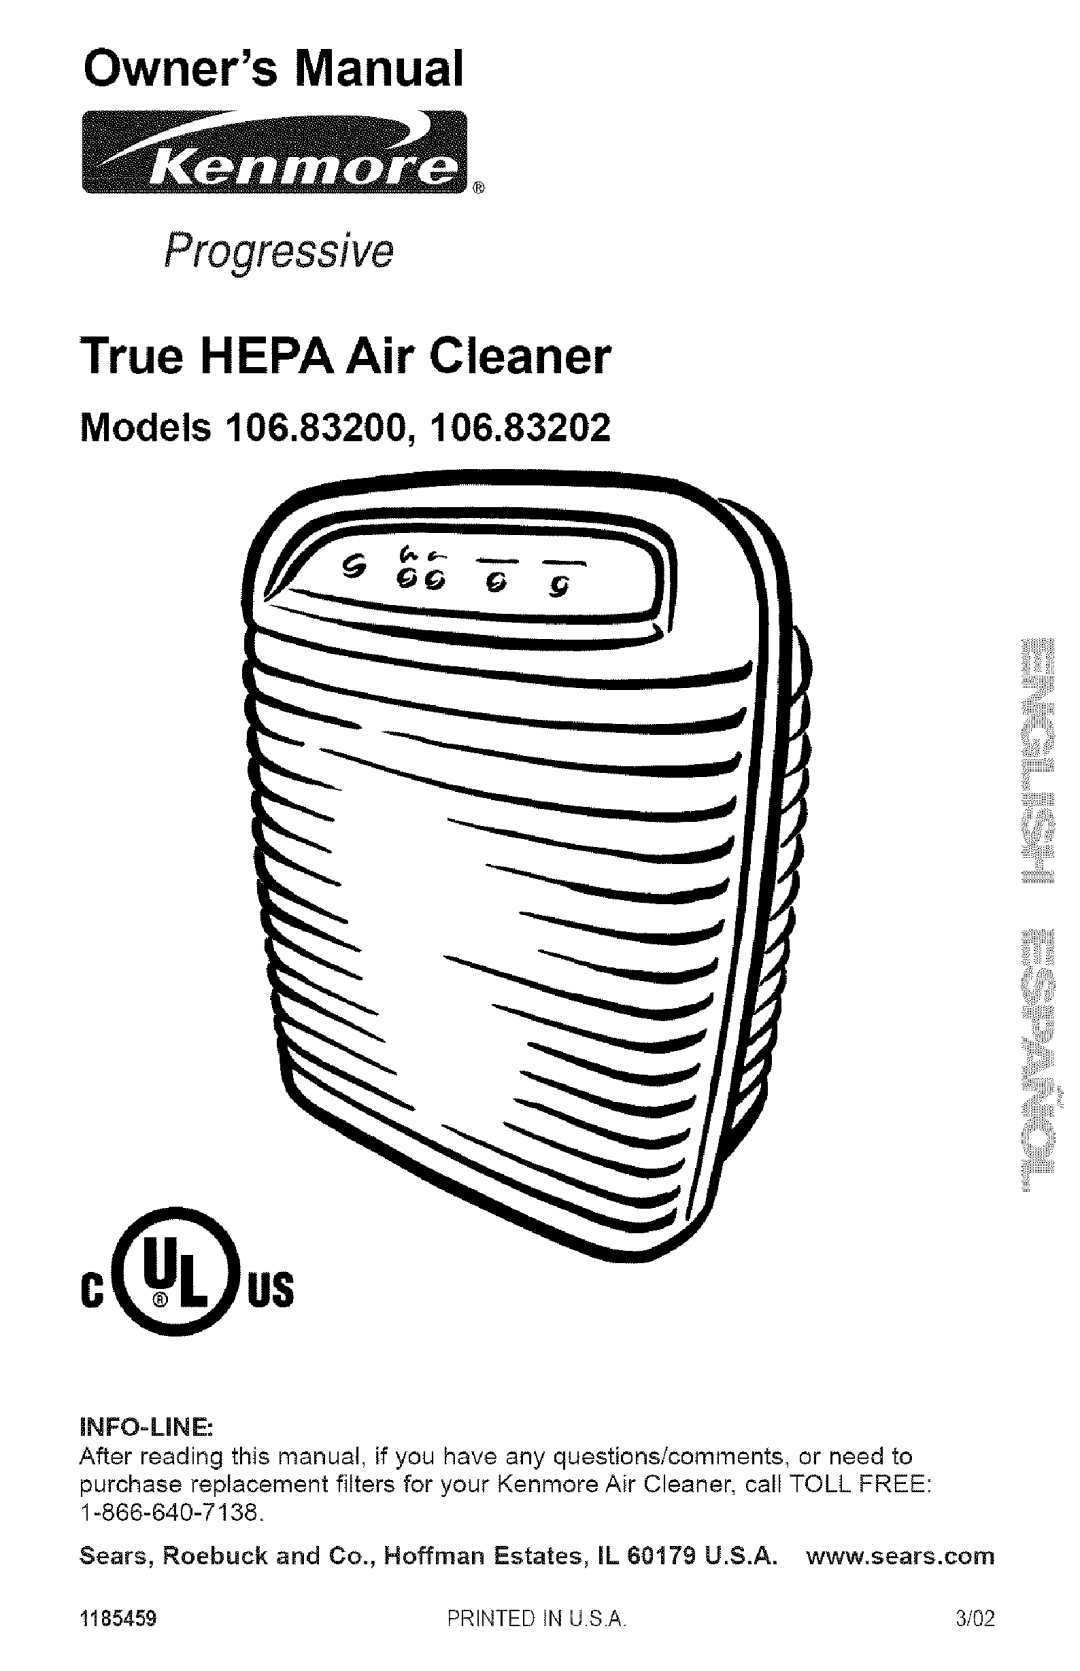 Kenmore 106.83202 owner manual True HEPA Air Cleaner, Progressive, Models 